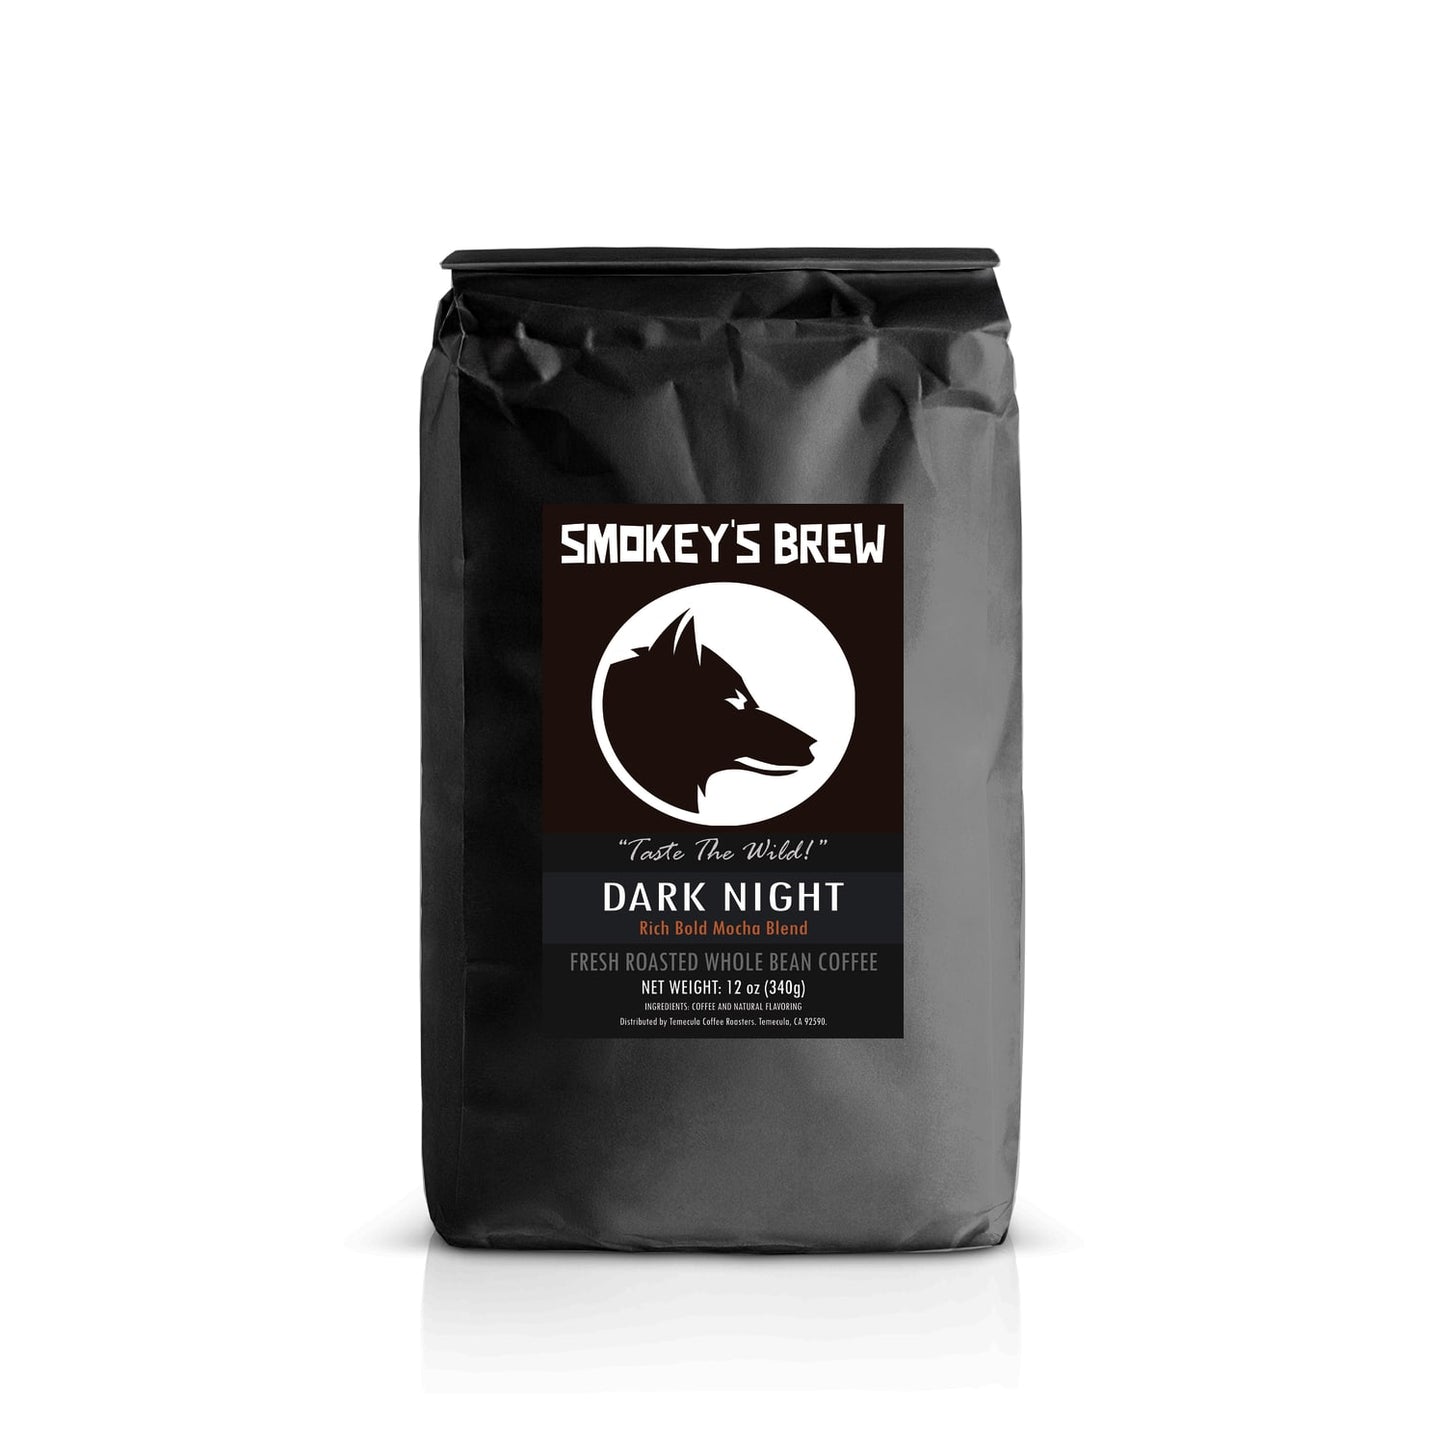 Smokey's Brew "Dark Night" Whole Bean Coffee